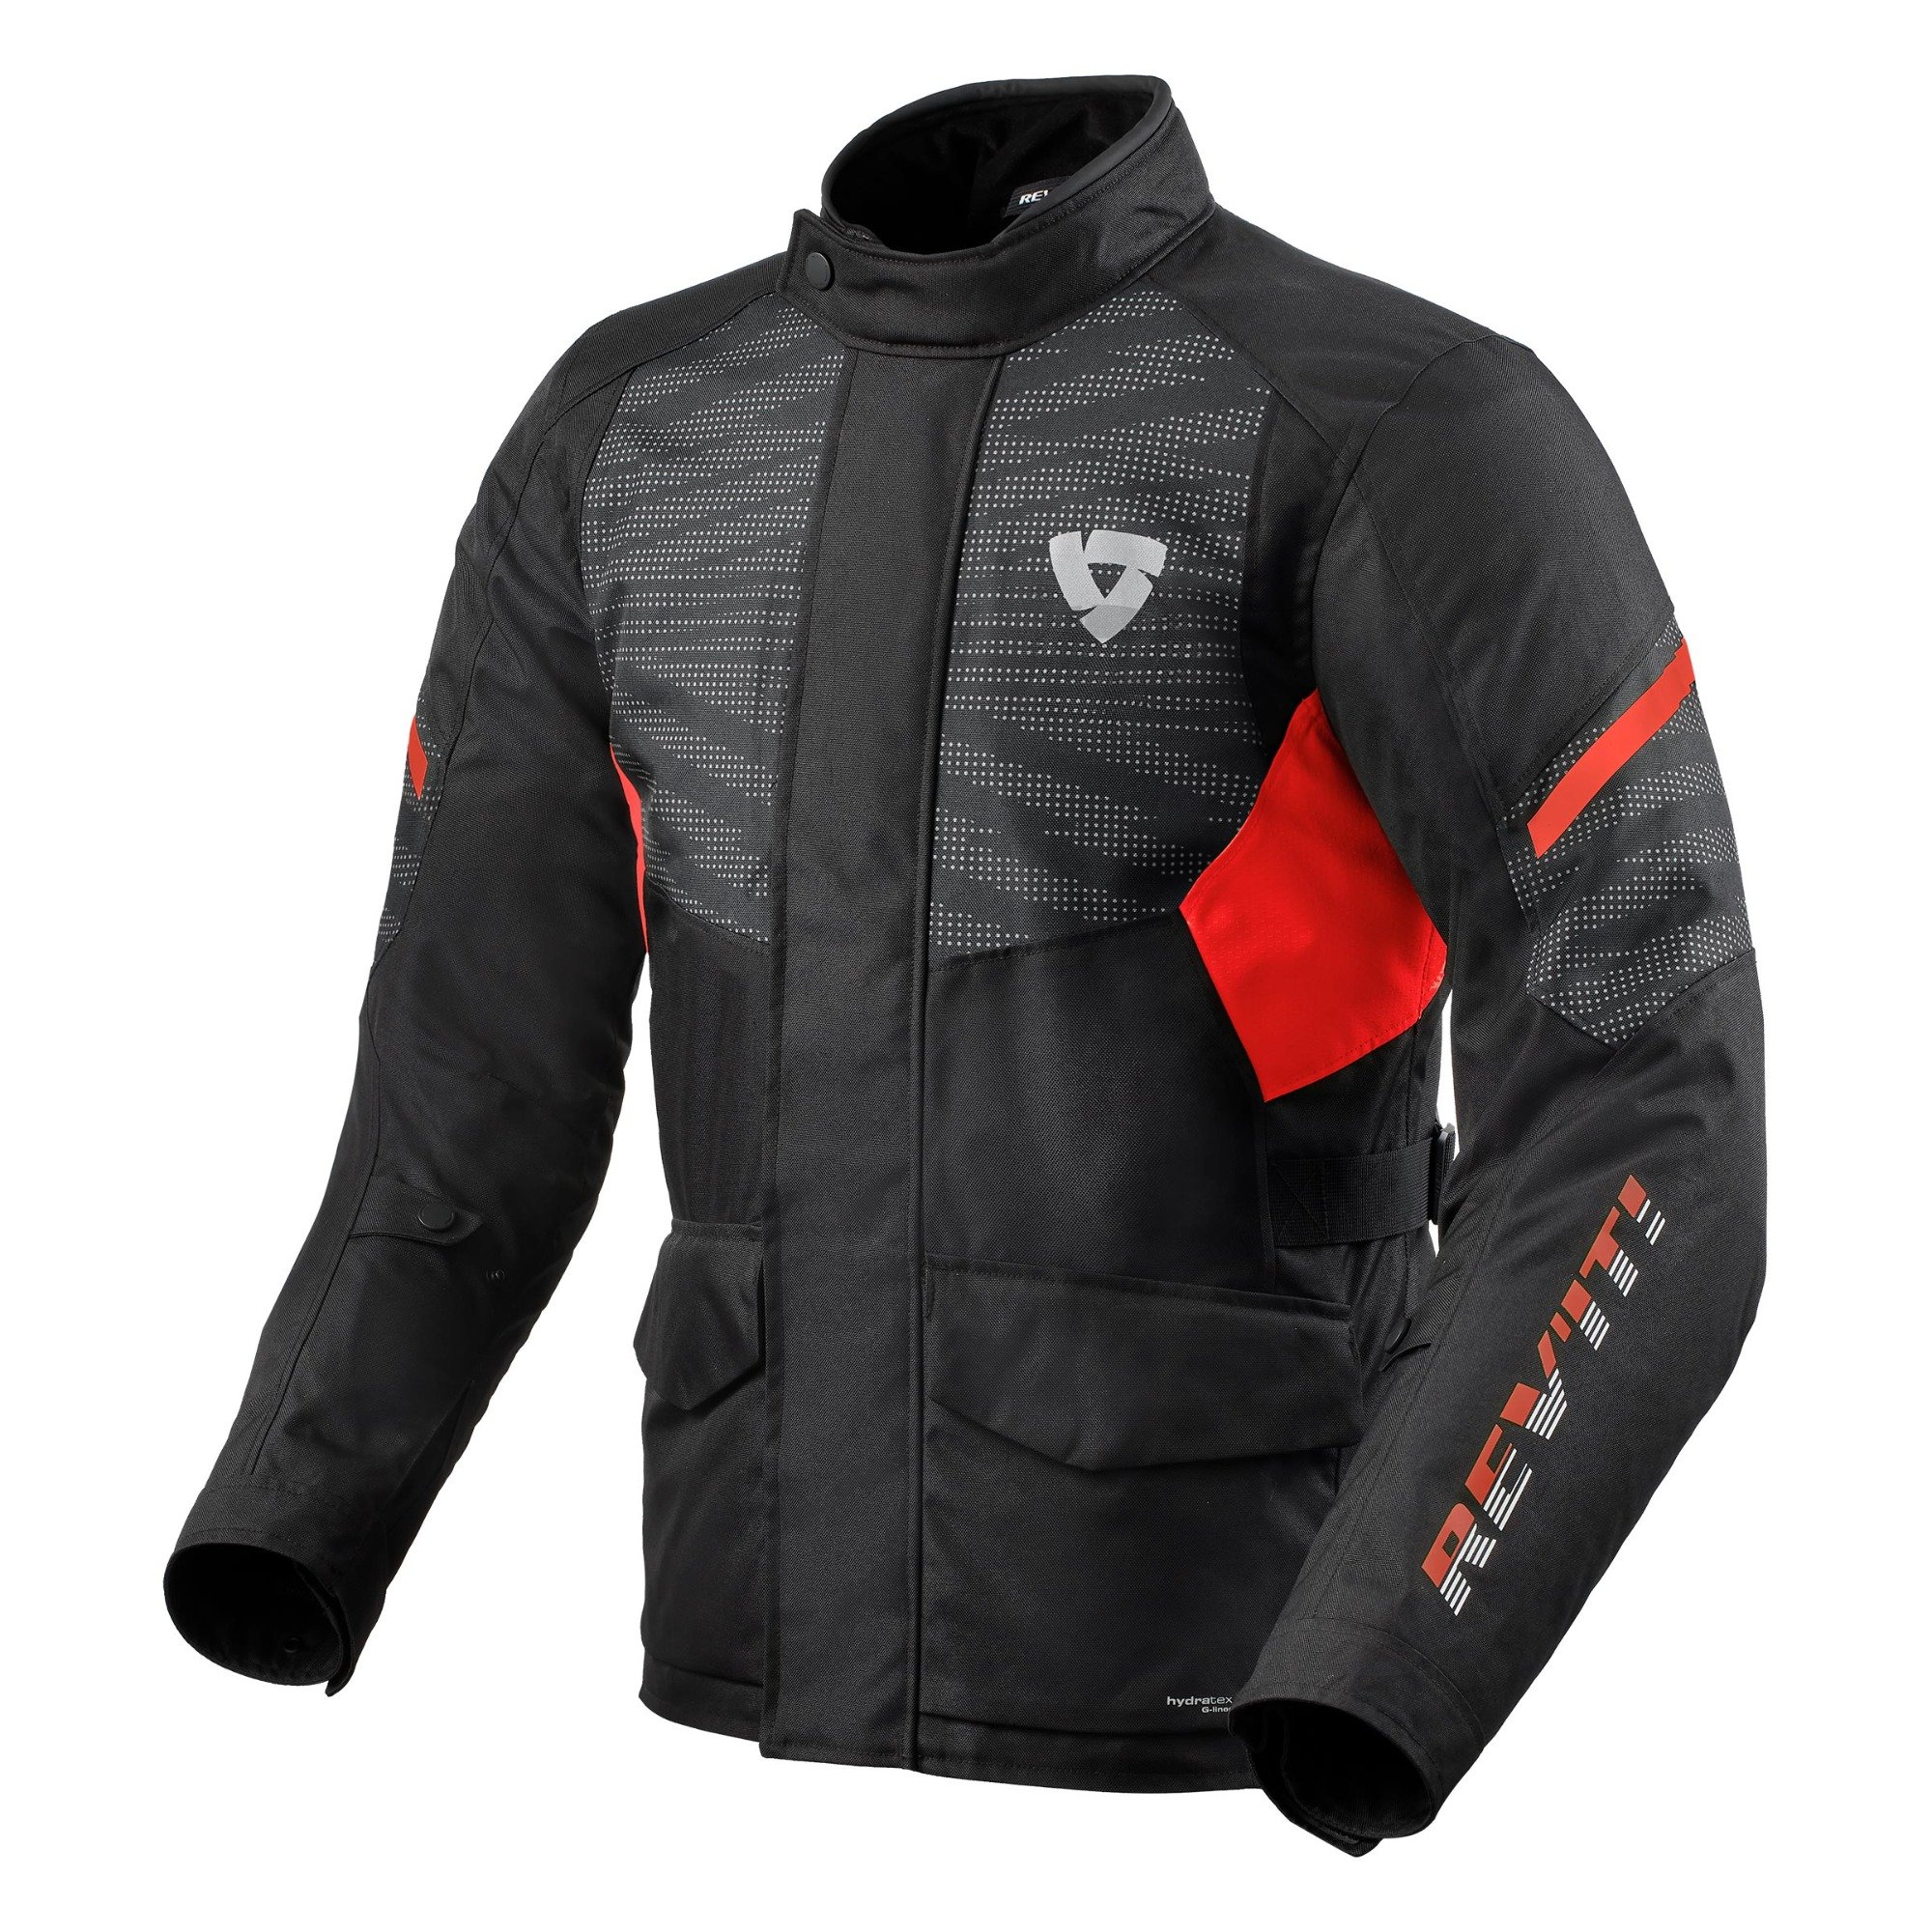 Image of REV'IT! Duke H2O Jacket Black Red Size 3XL EN